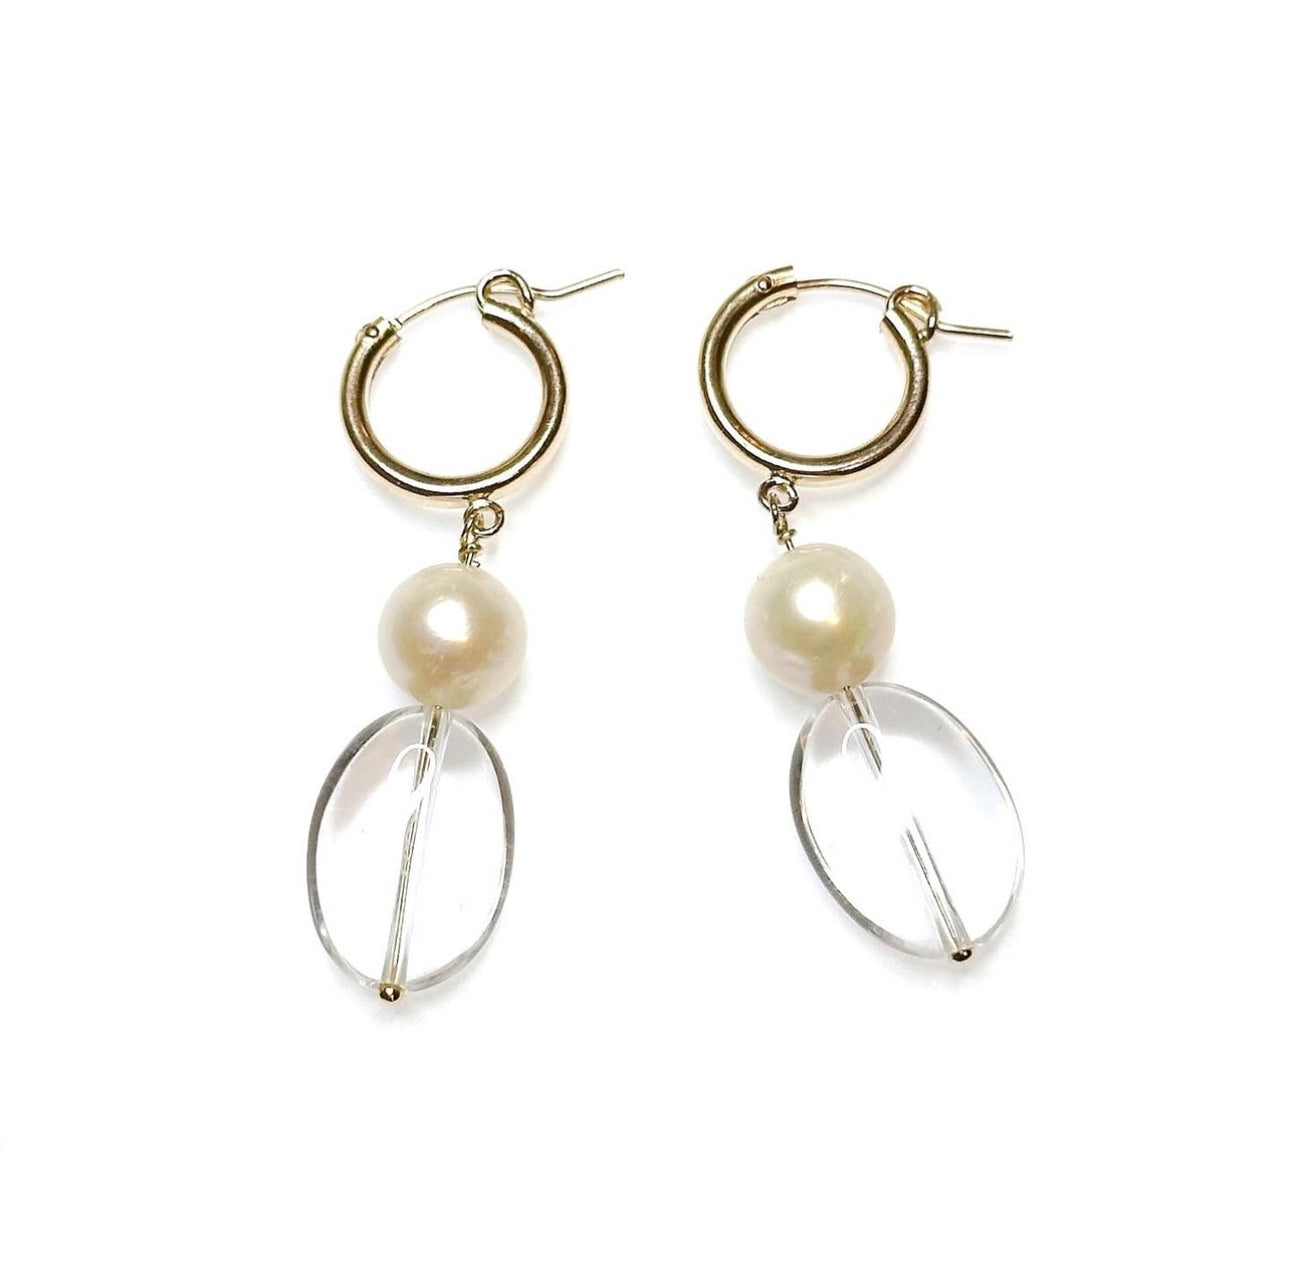 Pearl people earrings 2.0 (tarnish resistant 14K gold-filled)